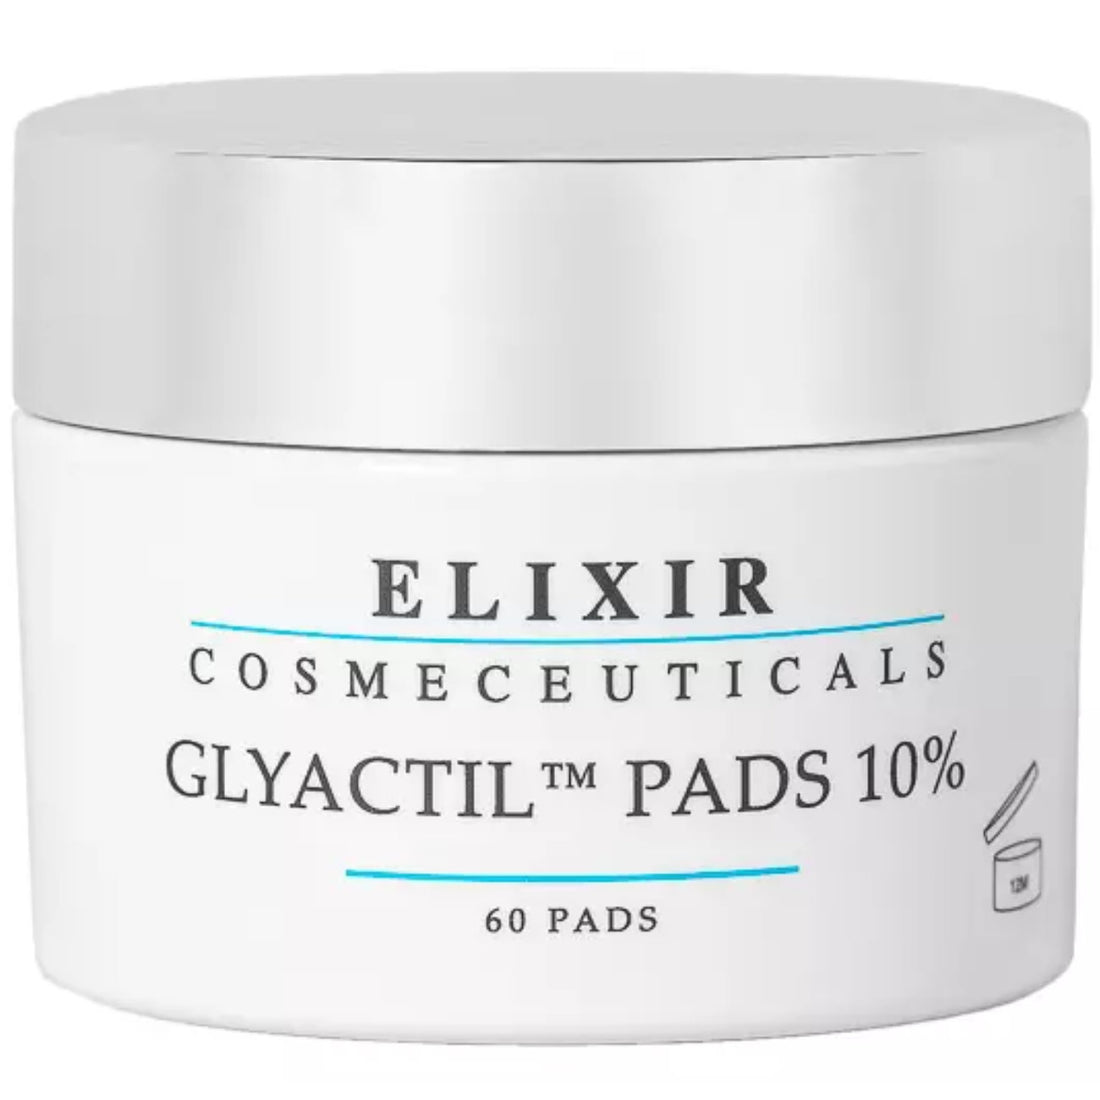 Elixir Cosmeceuticals Glyactil Pads 10%